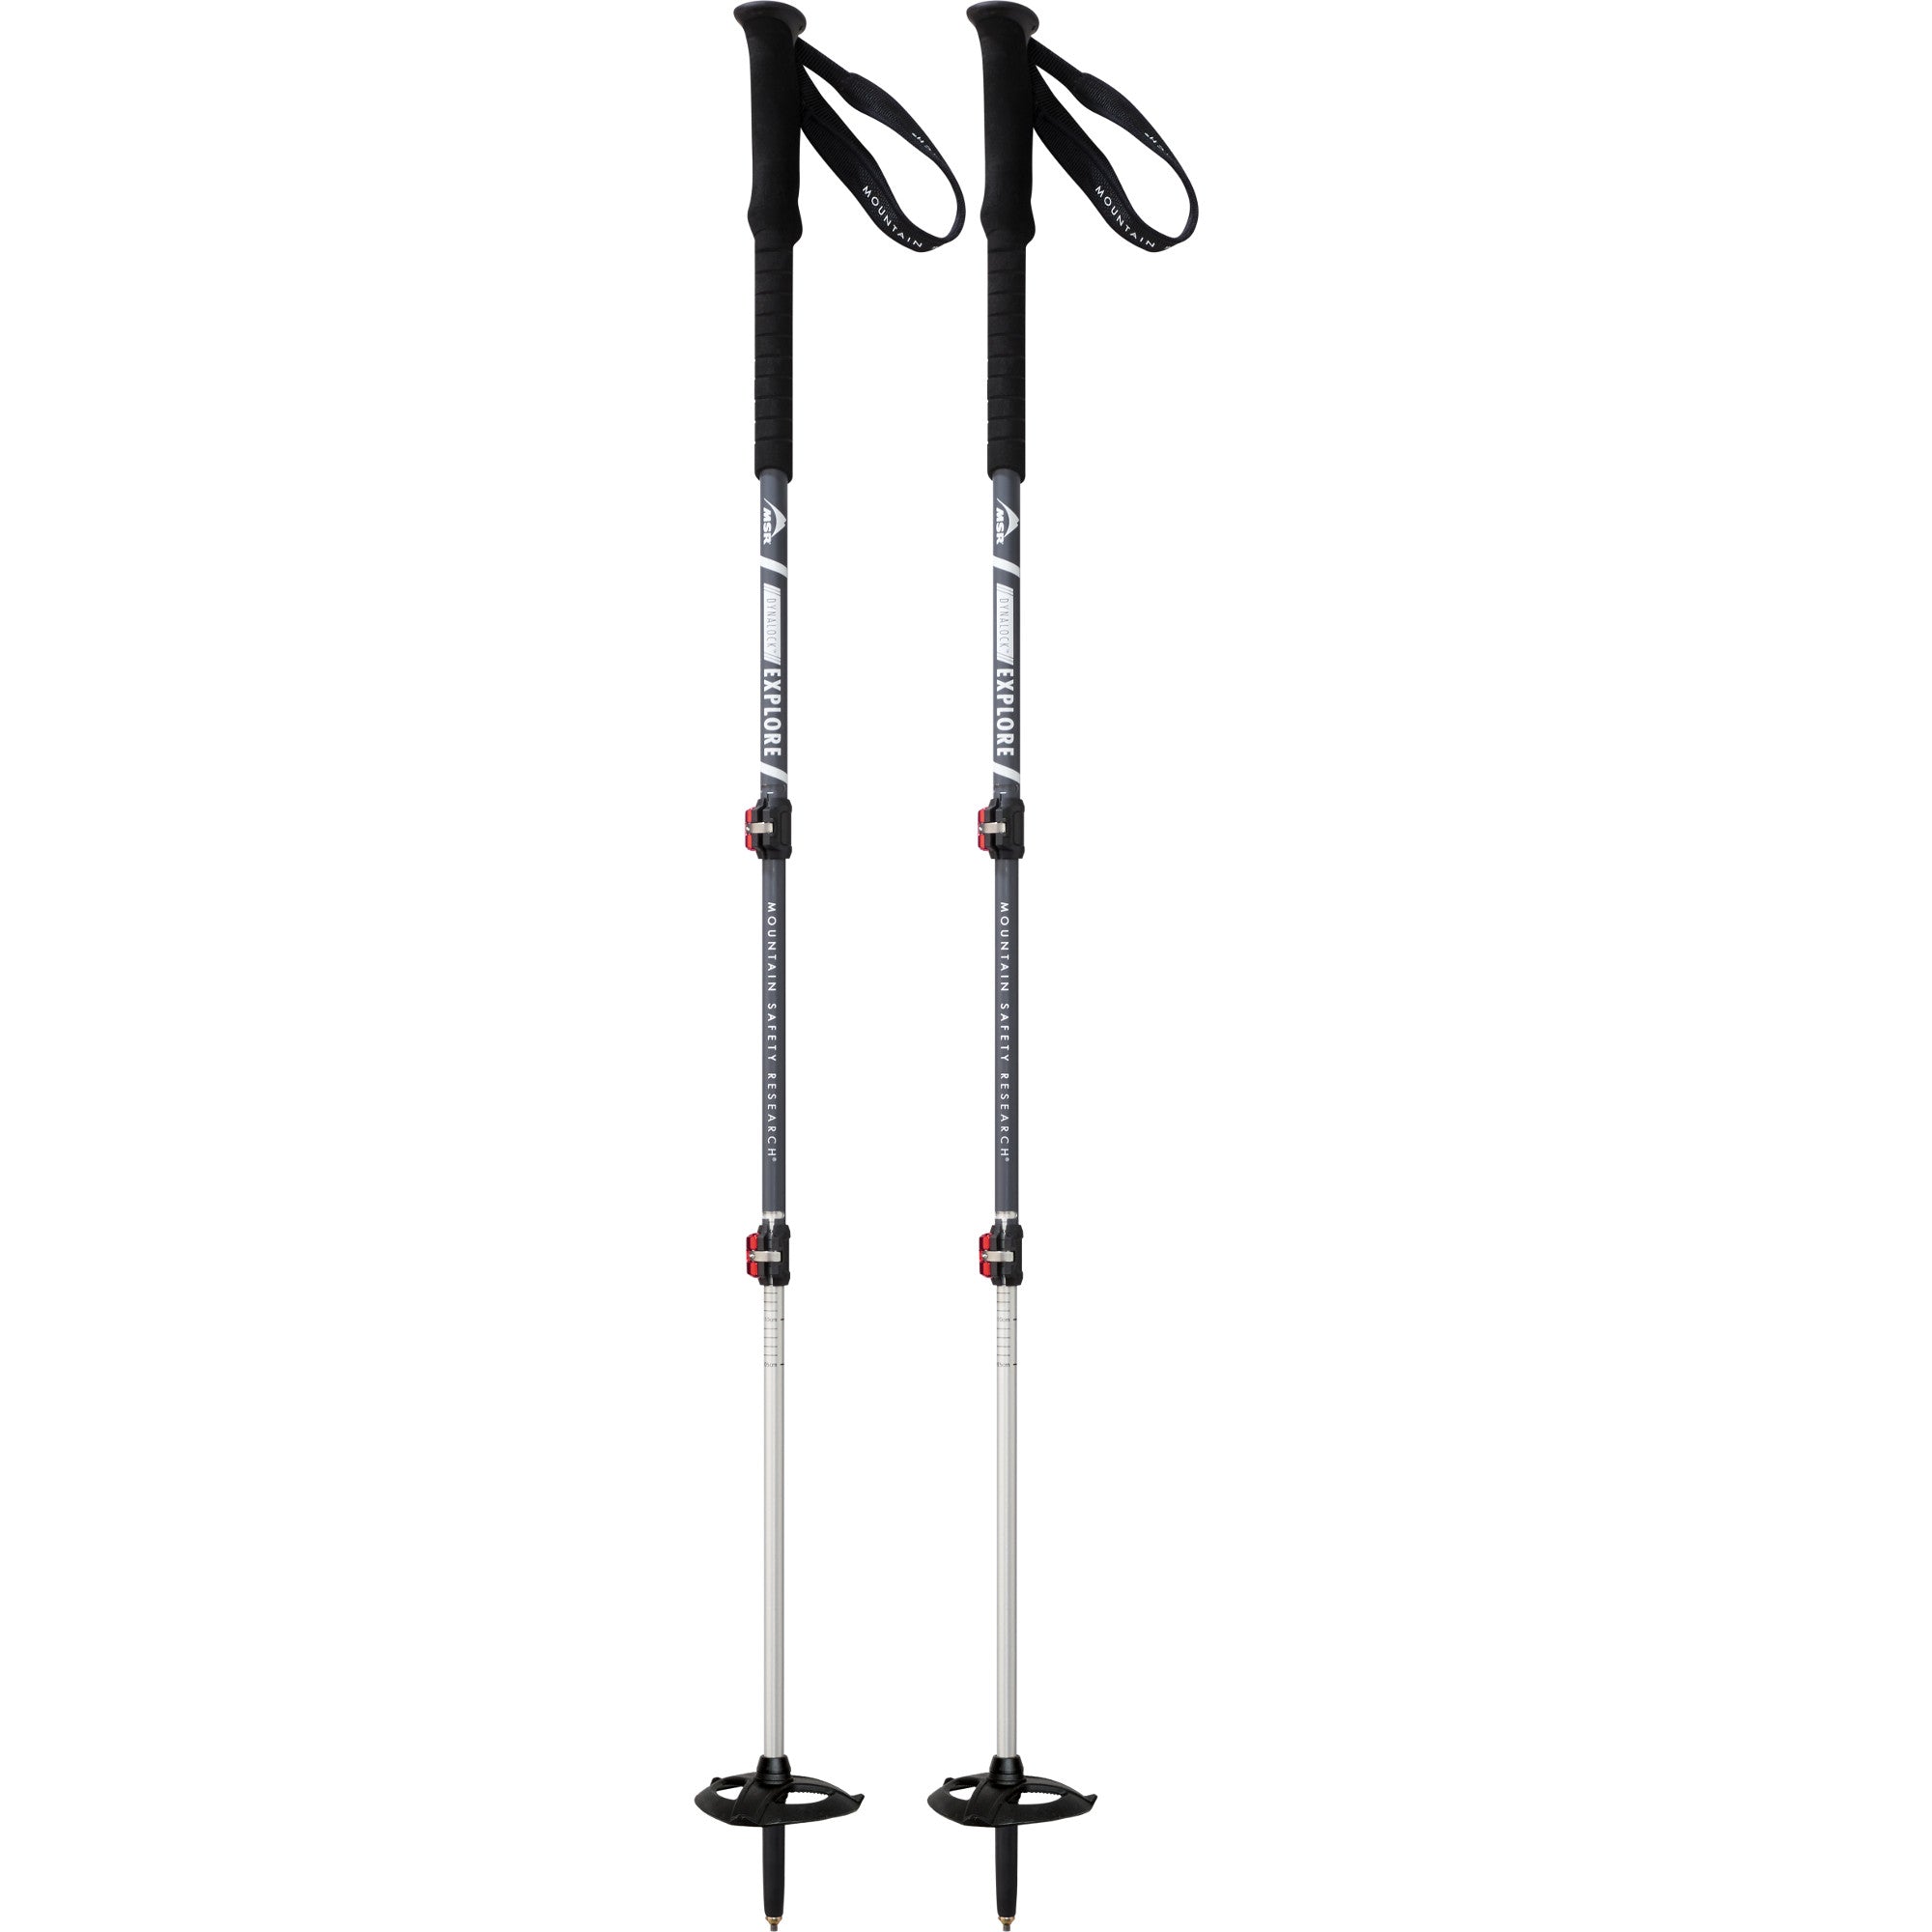 Pair of MSR Dynalock Explore trekking poles in Grey colour